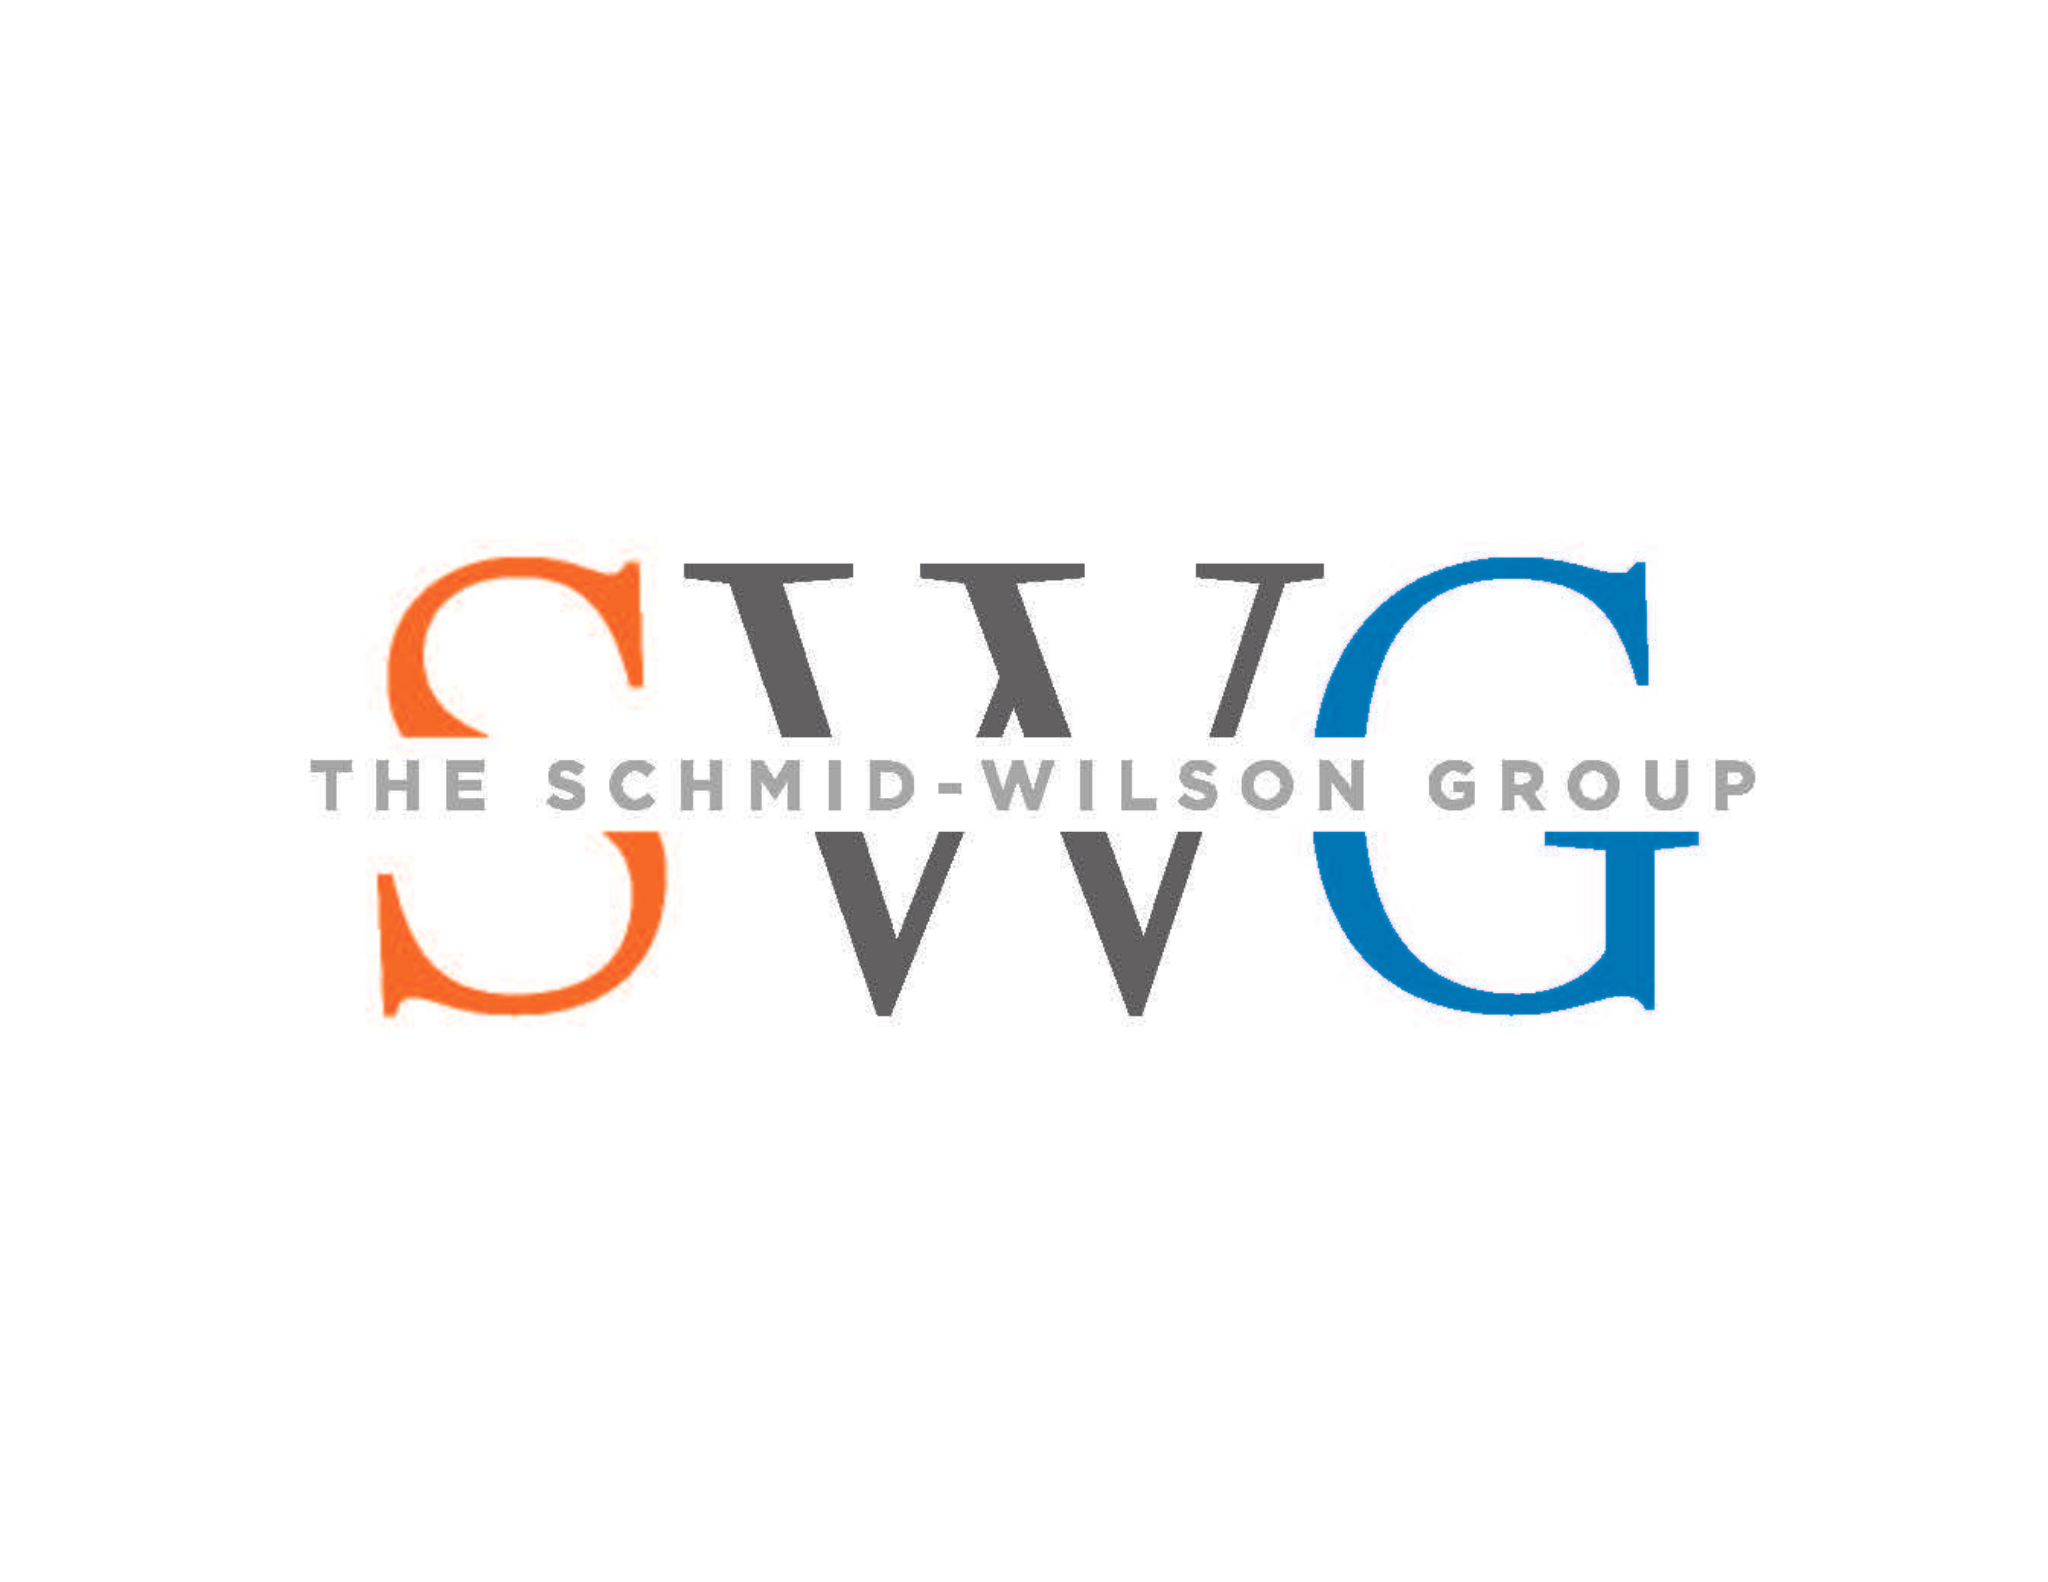 The Schmid-Wilson Group